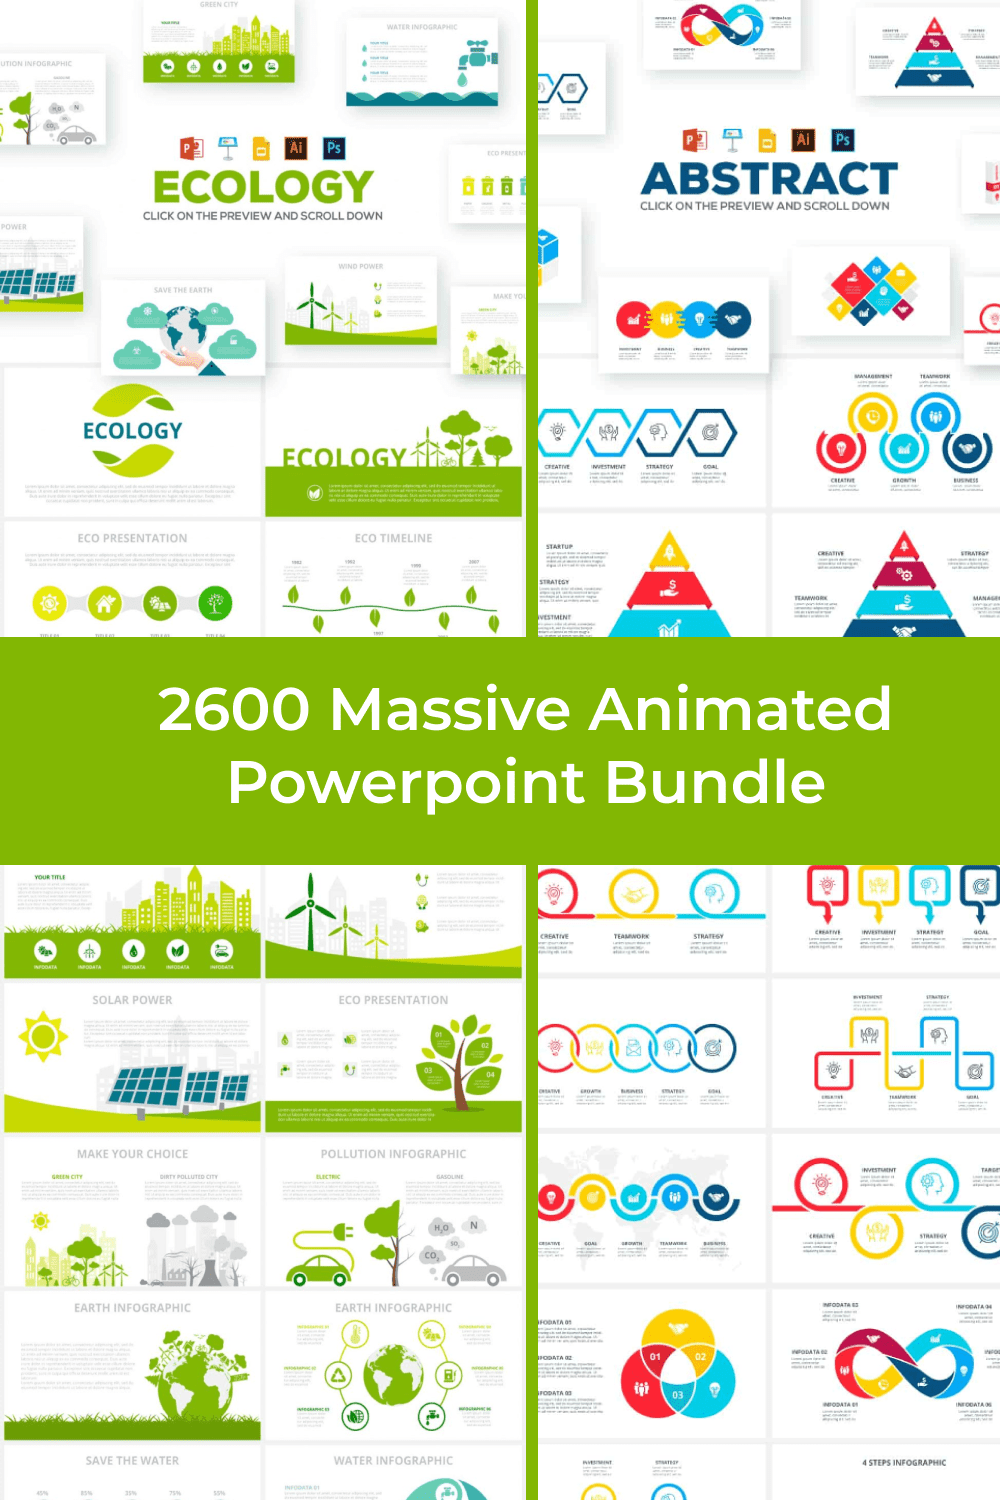 2600 Massive Animated Powerpoint Bundle - MasterBundles - Pinterest Collage Image.